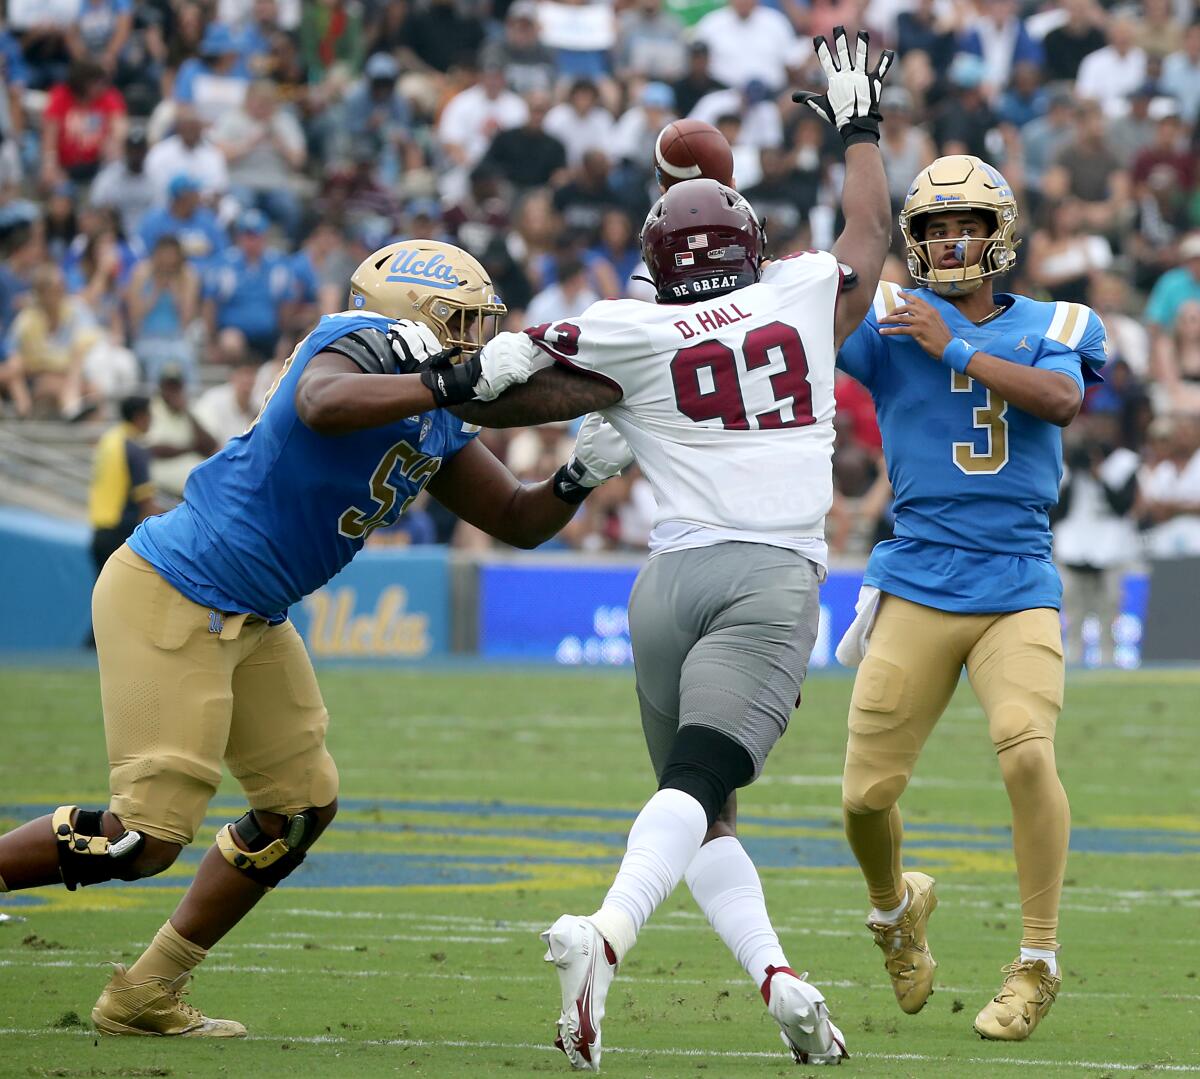 UCLA quarterback Dante Moore throws in the second quarter against North Carolina Central.